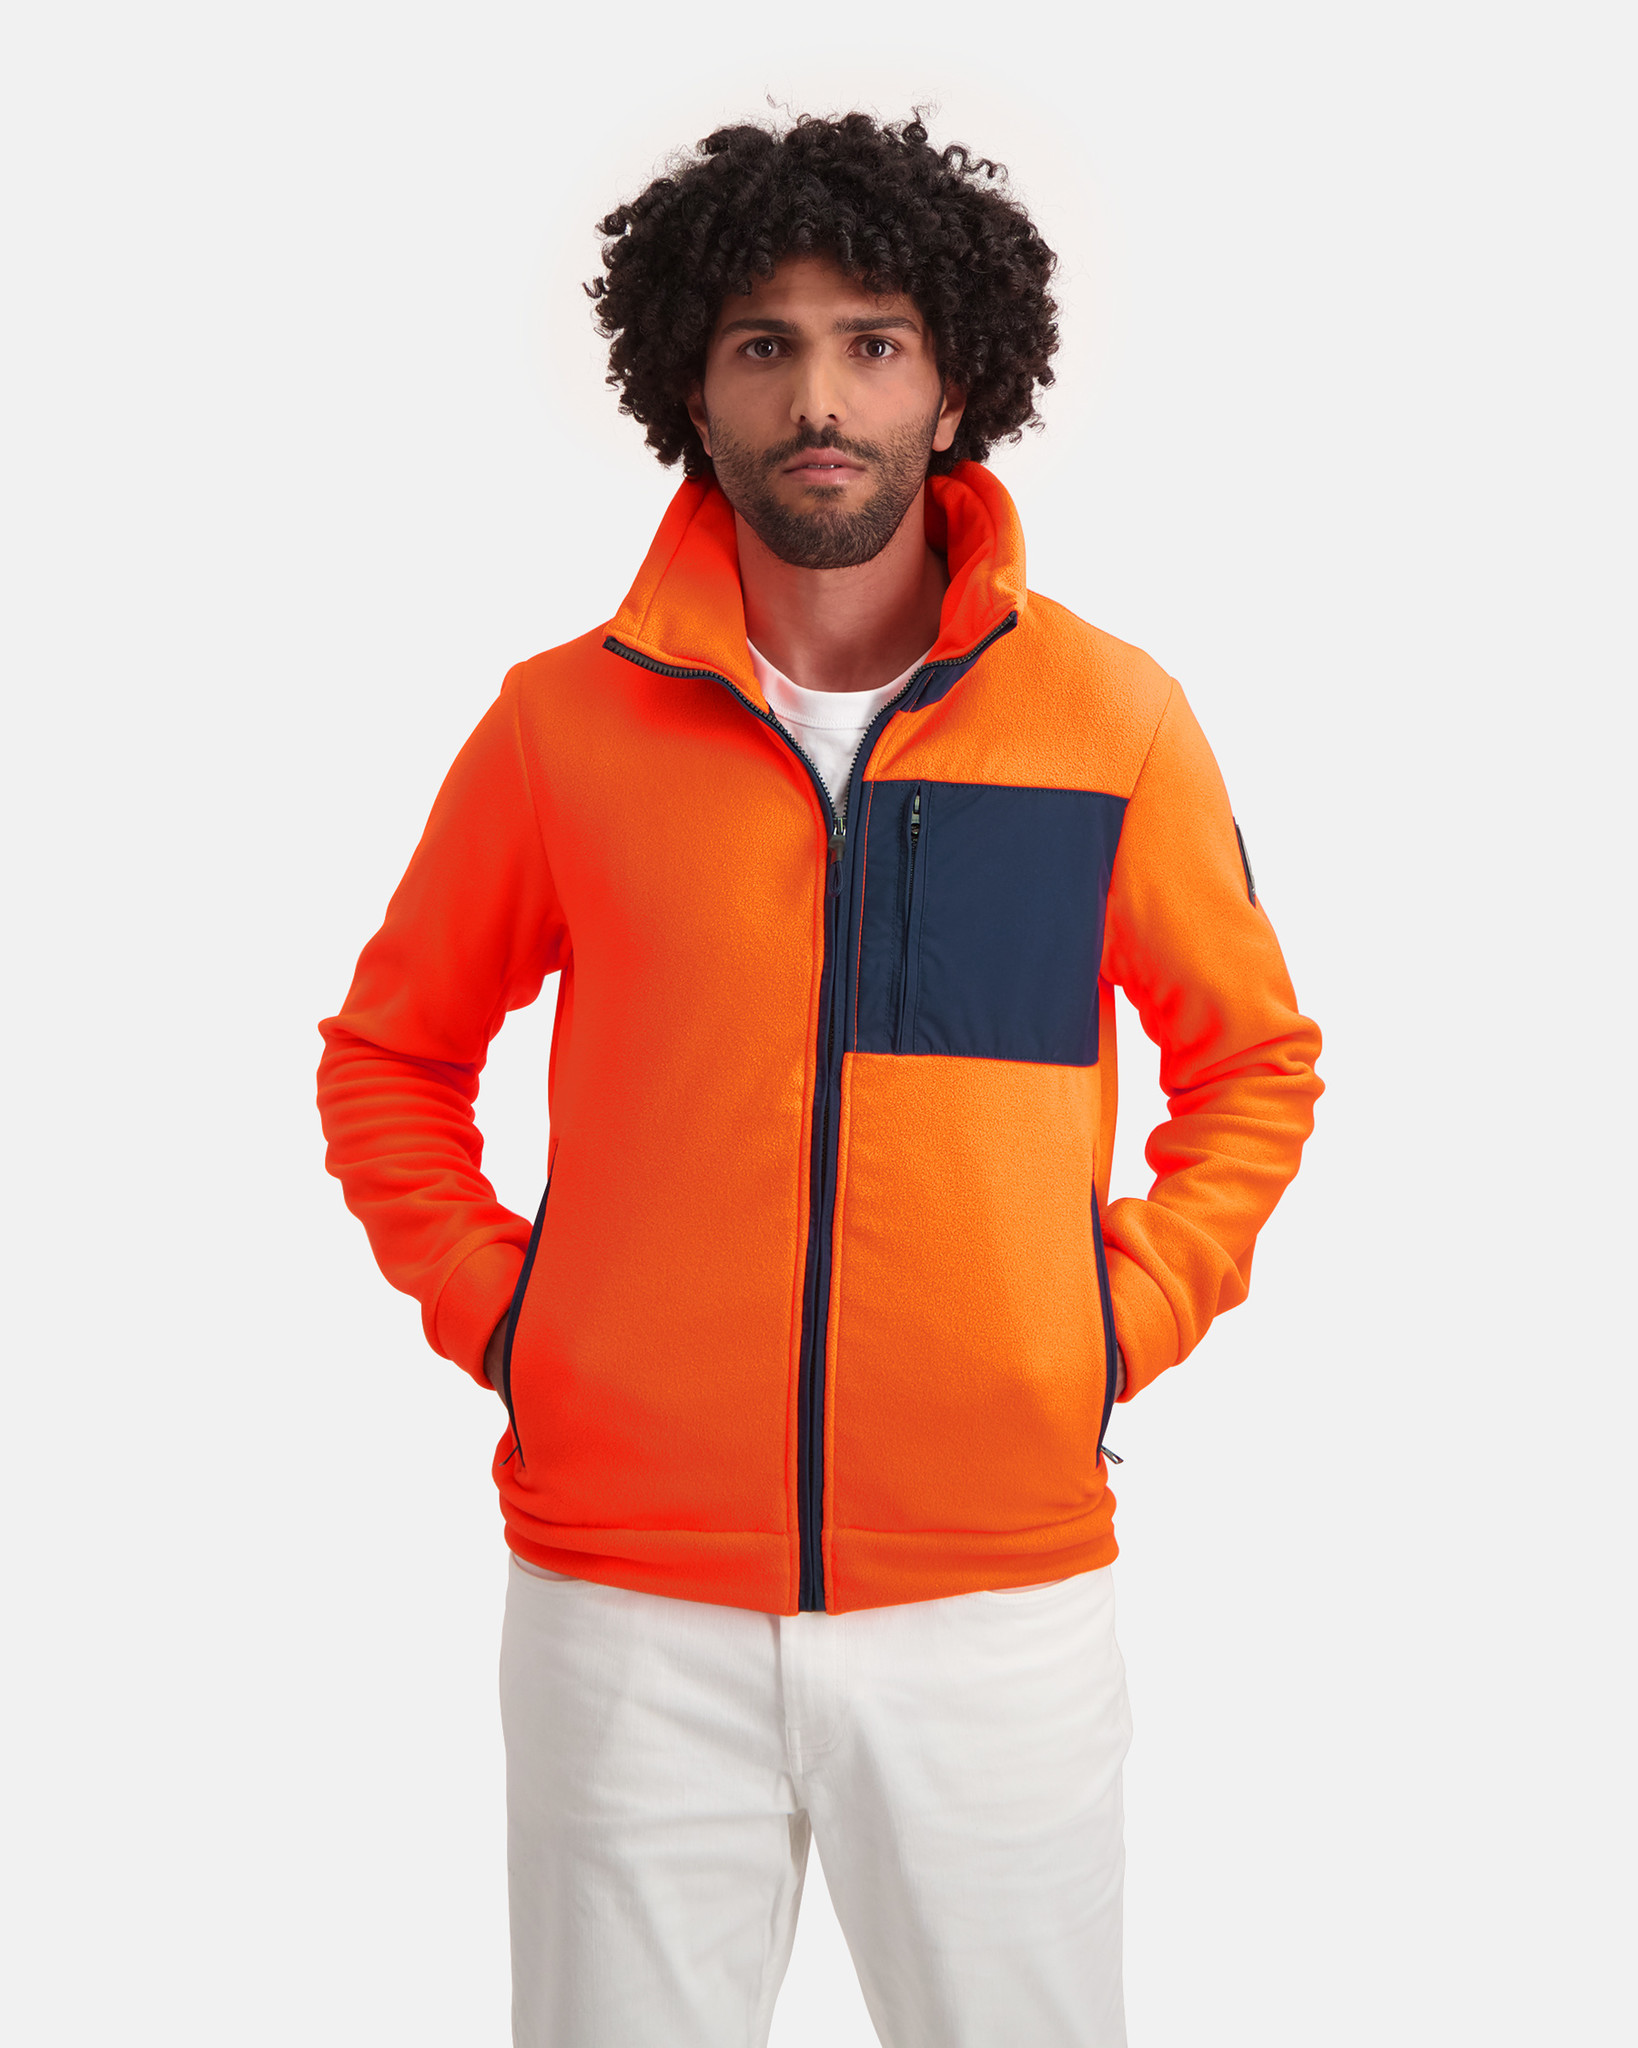 The 100% recycled polyester Viking fleece orange